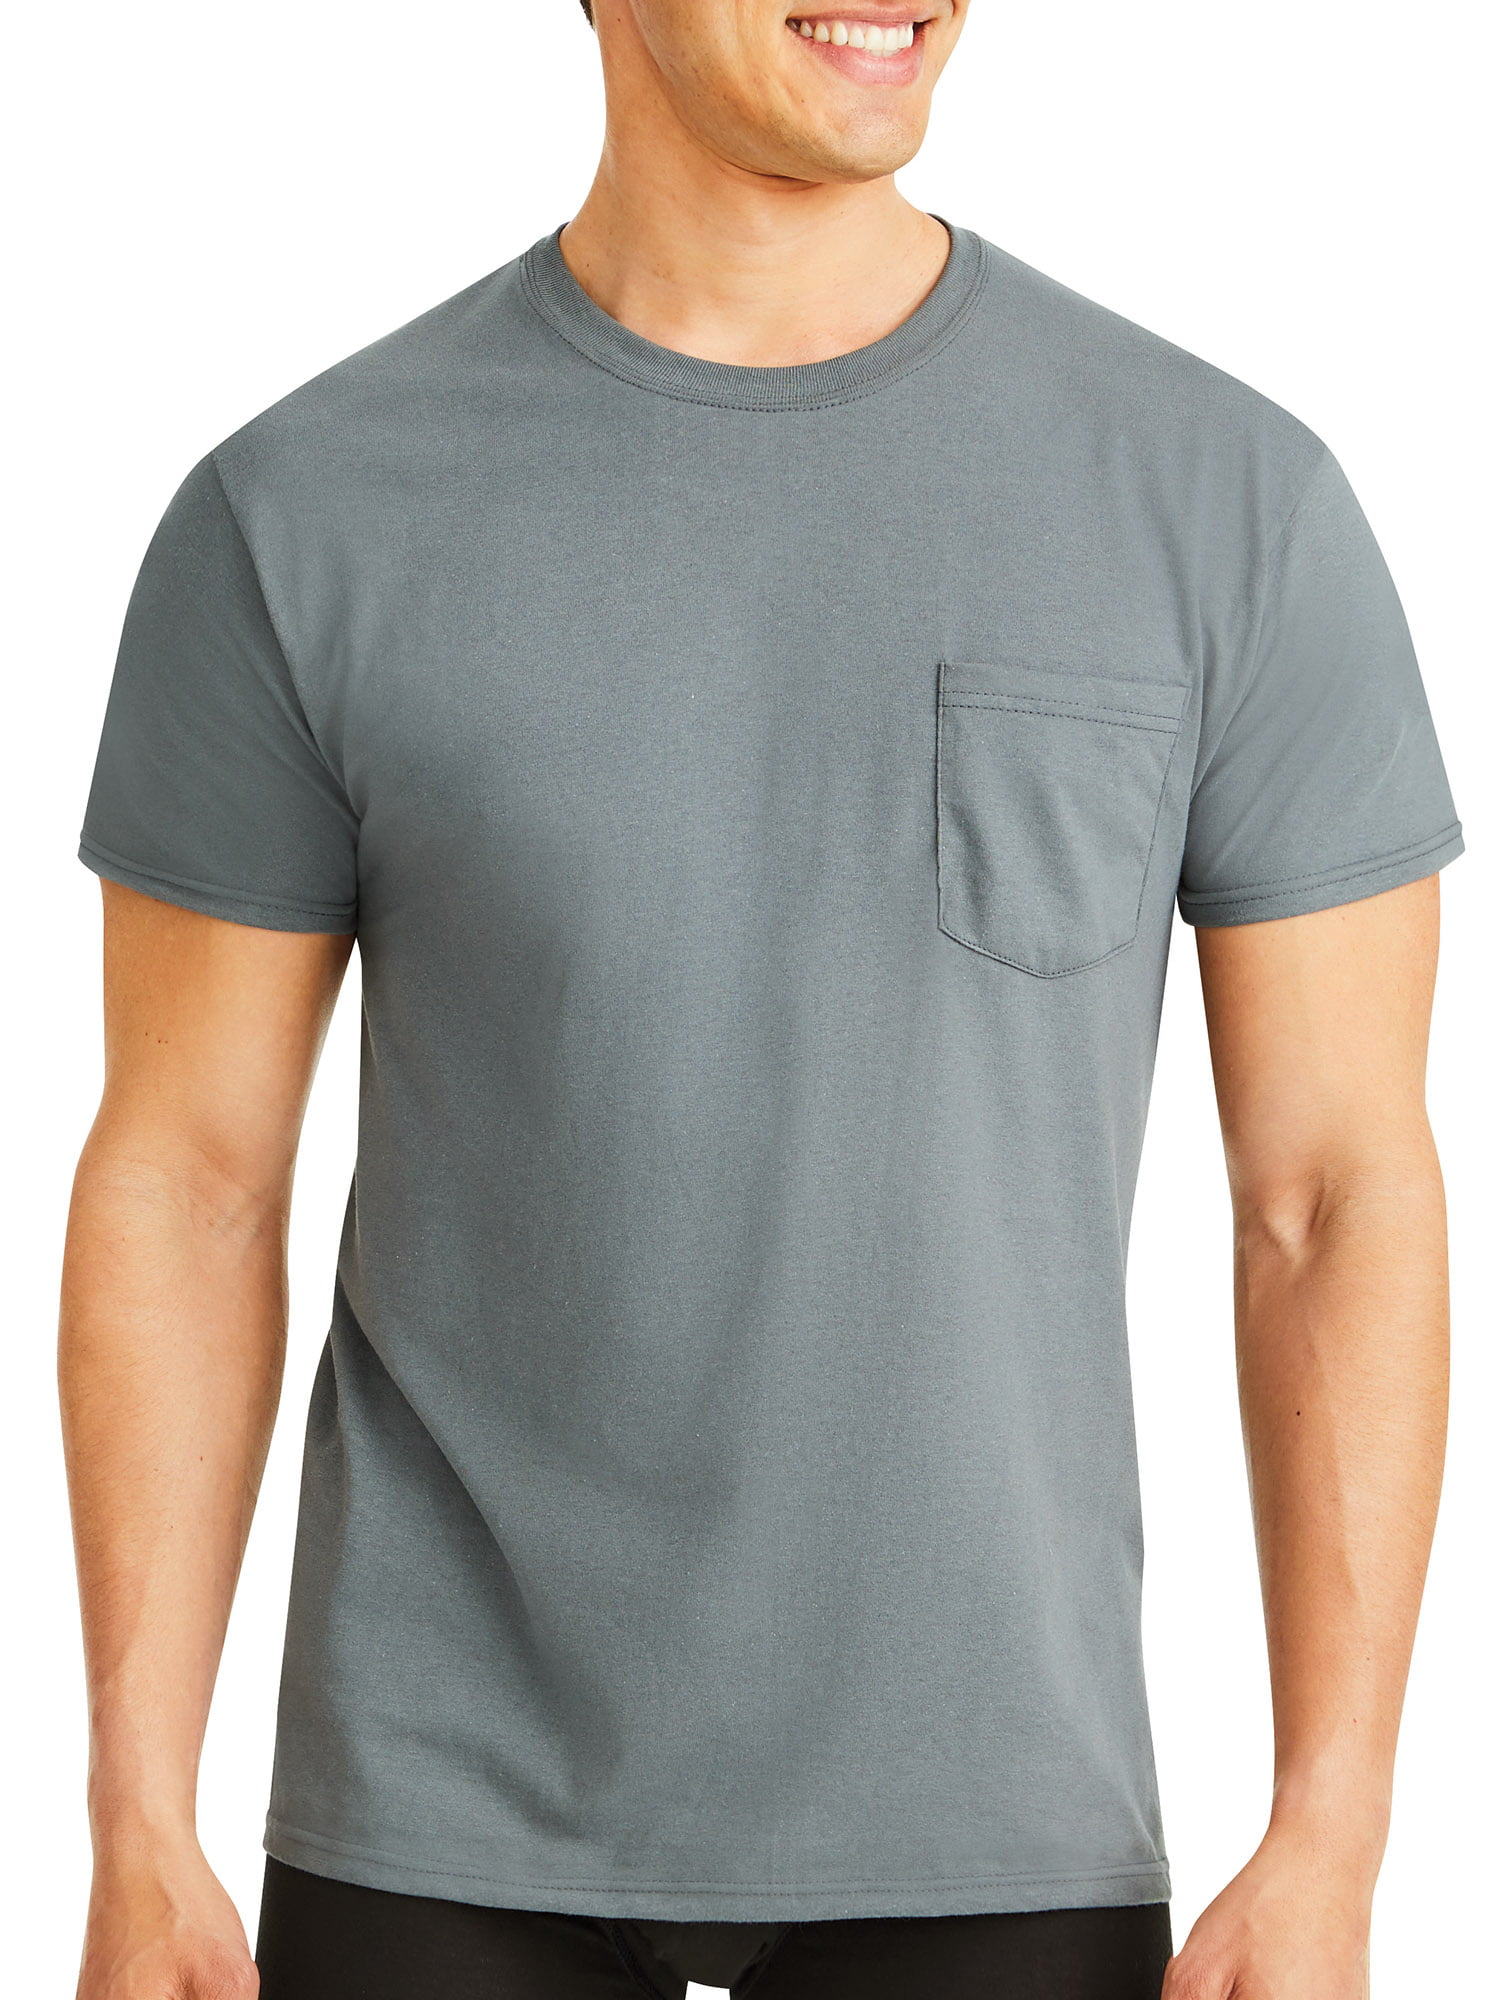 Hanes - Hanes Men's ComfortSoft Tagless Pocket T-Shirts, 6 ...